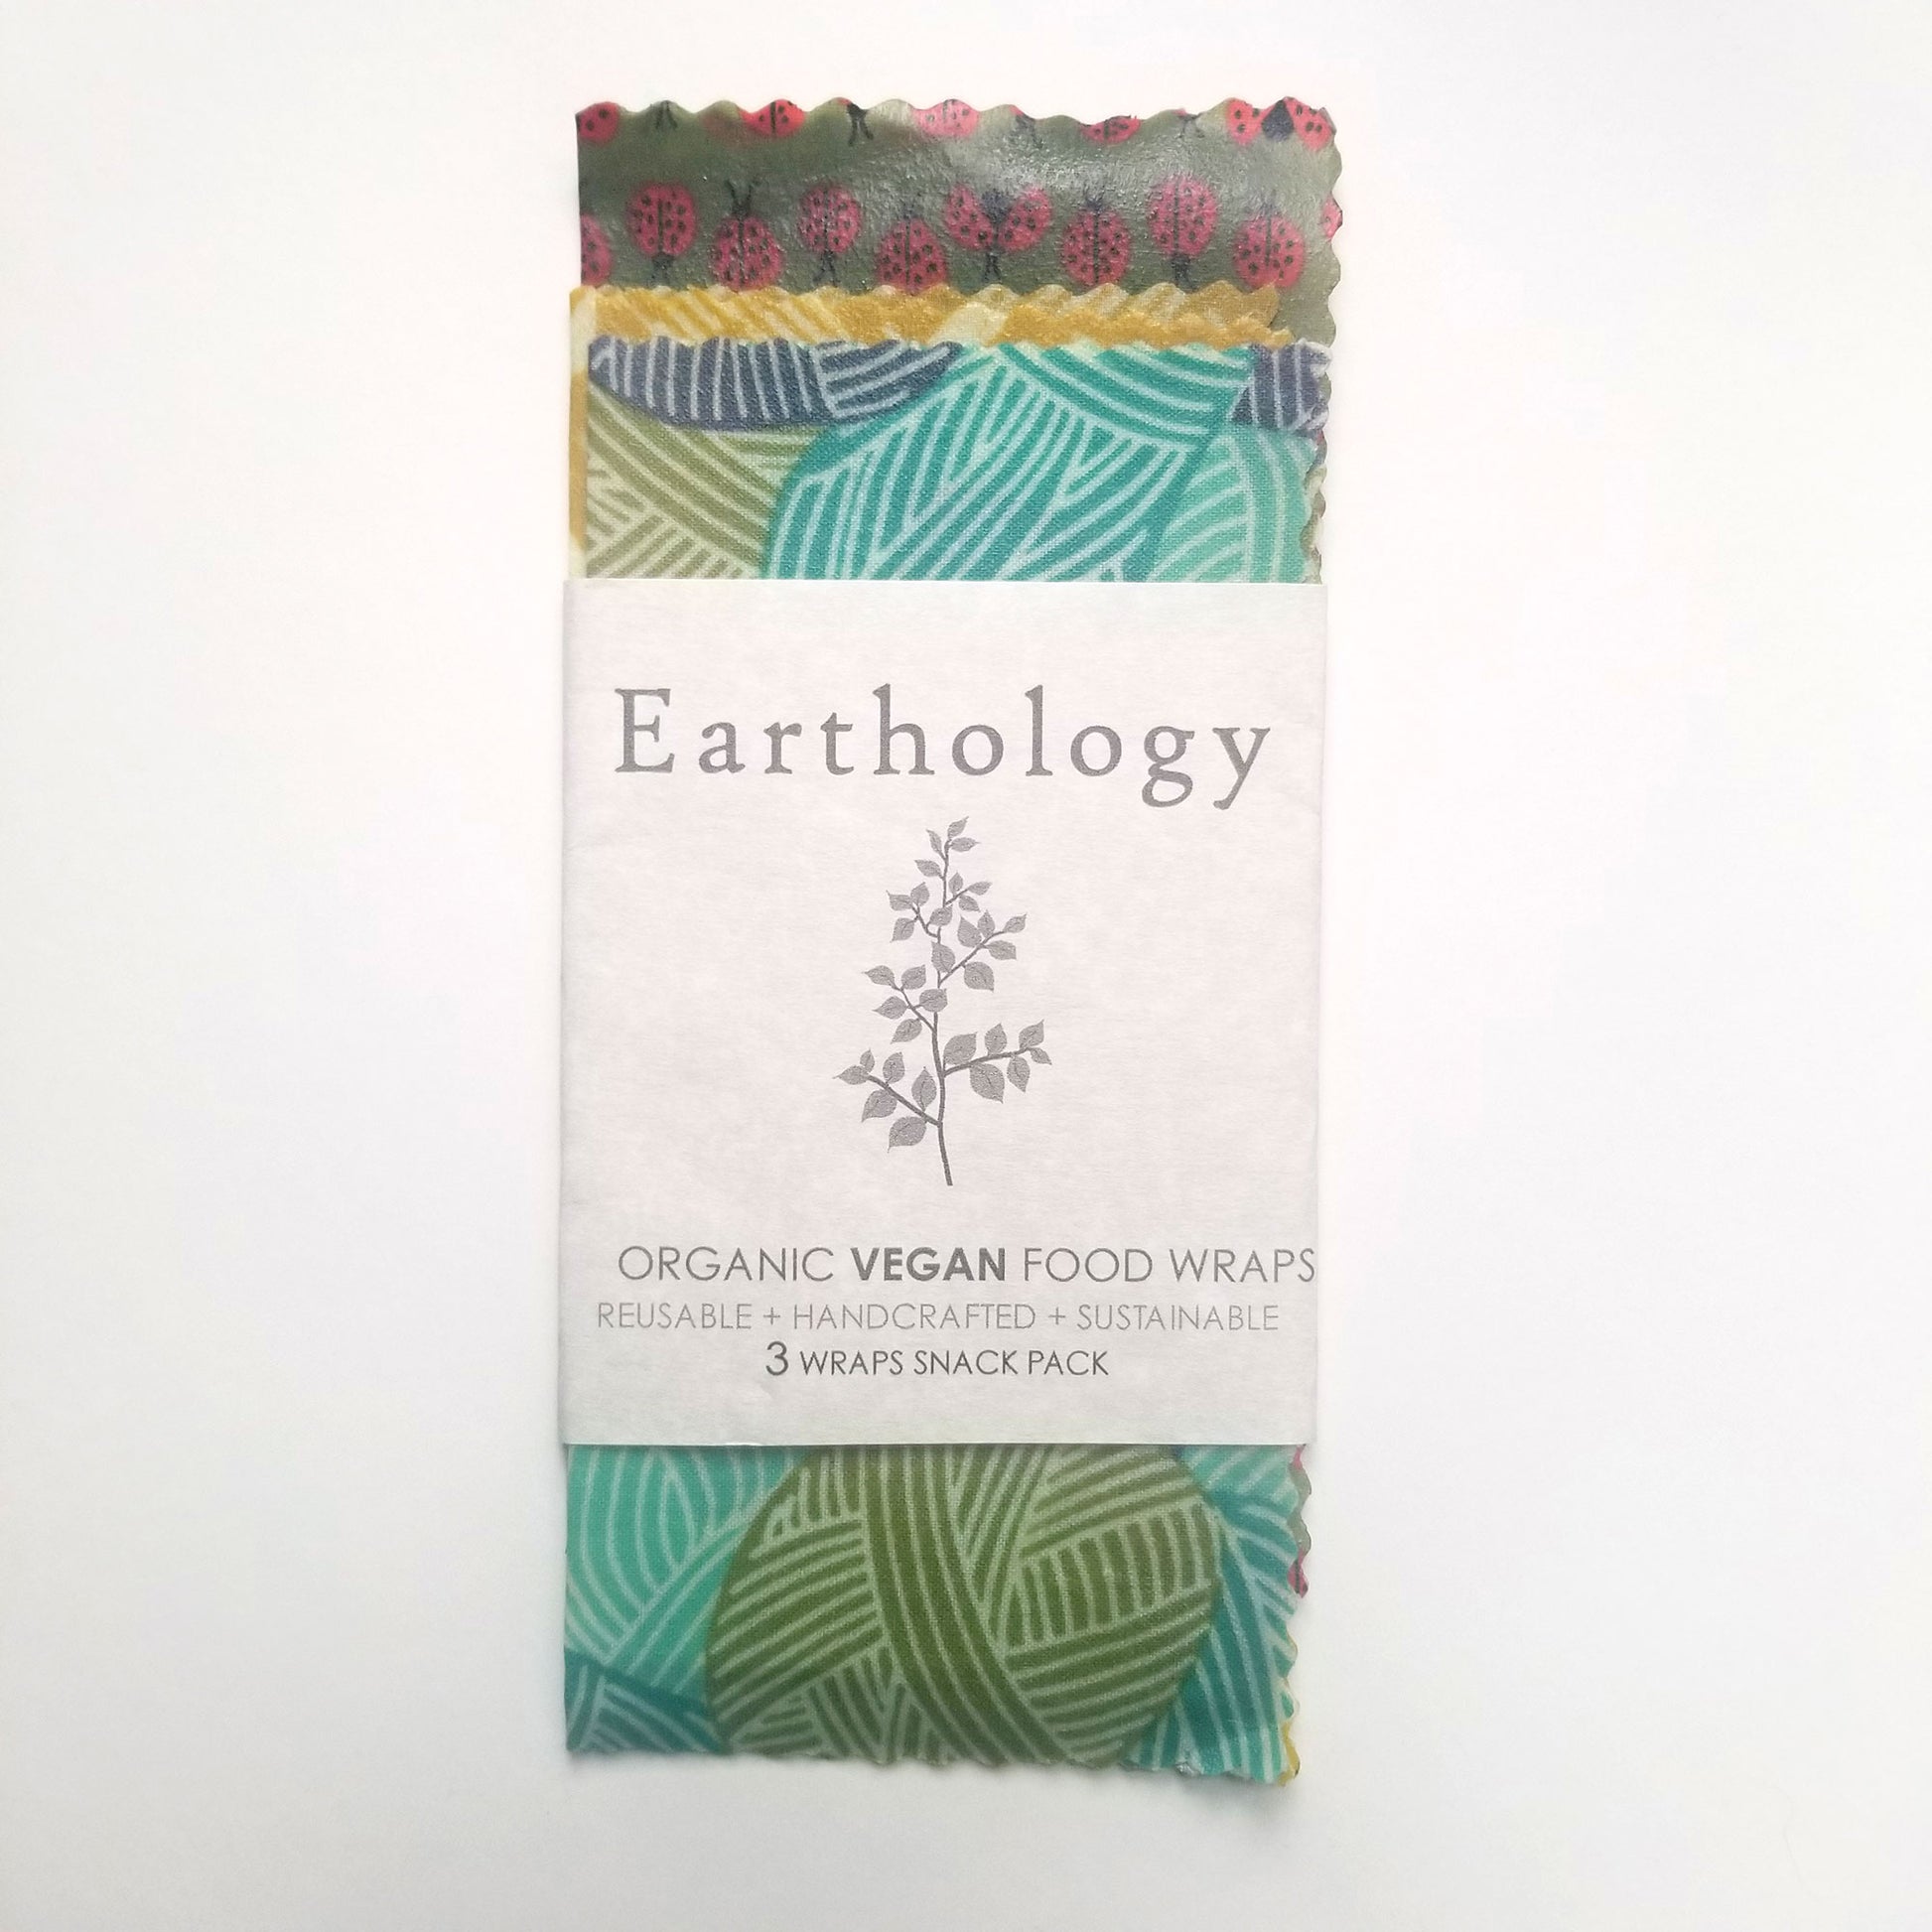 Earthology vegan food wraps snack pack